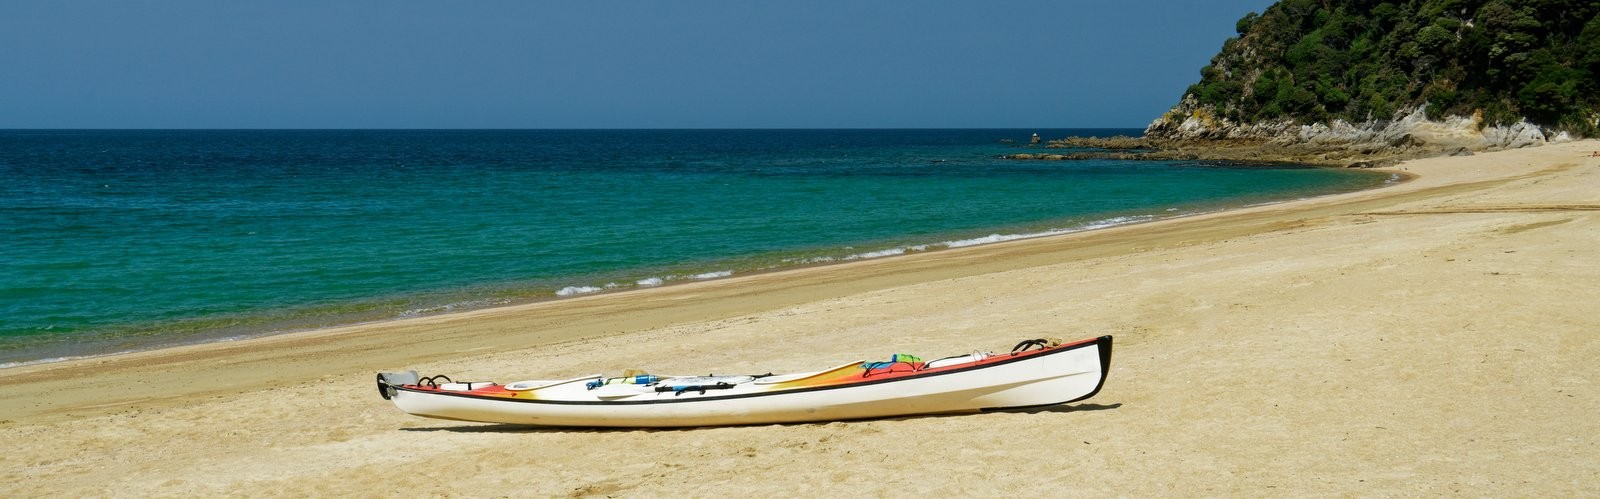 Sea kayak